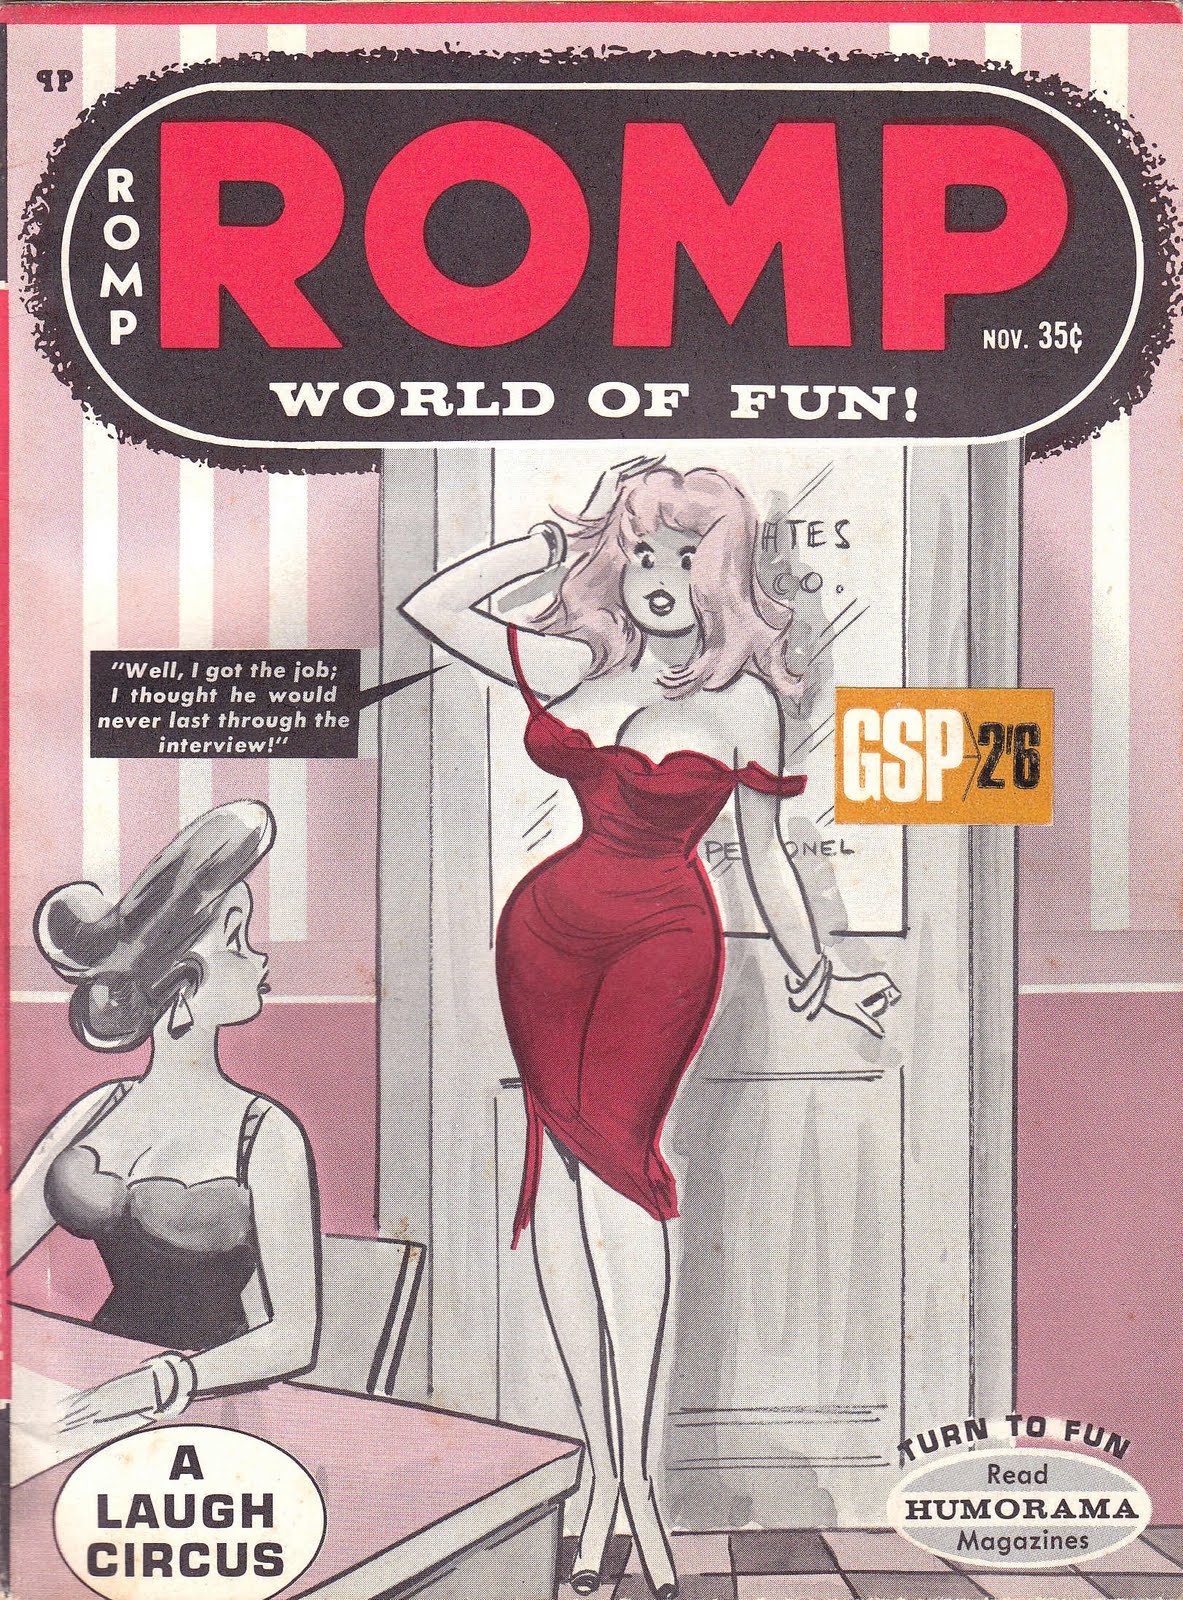 Rom pompompom — 60's charm